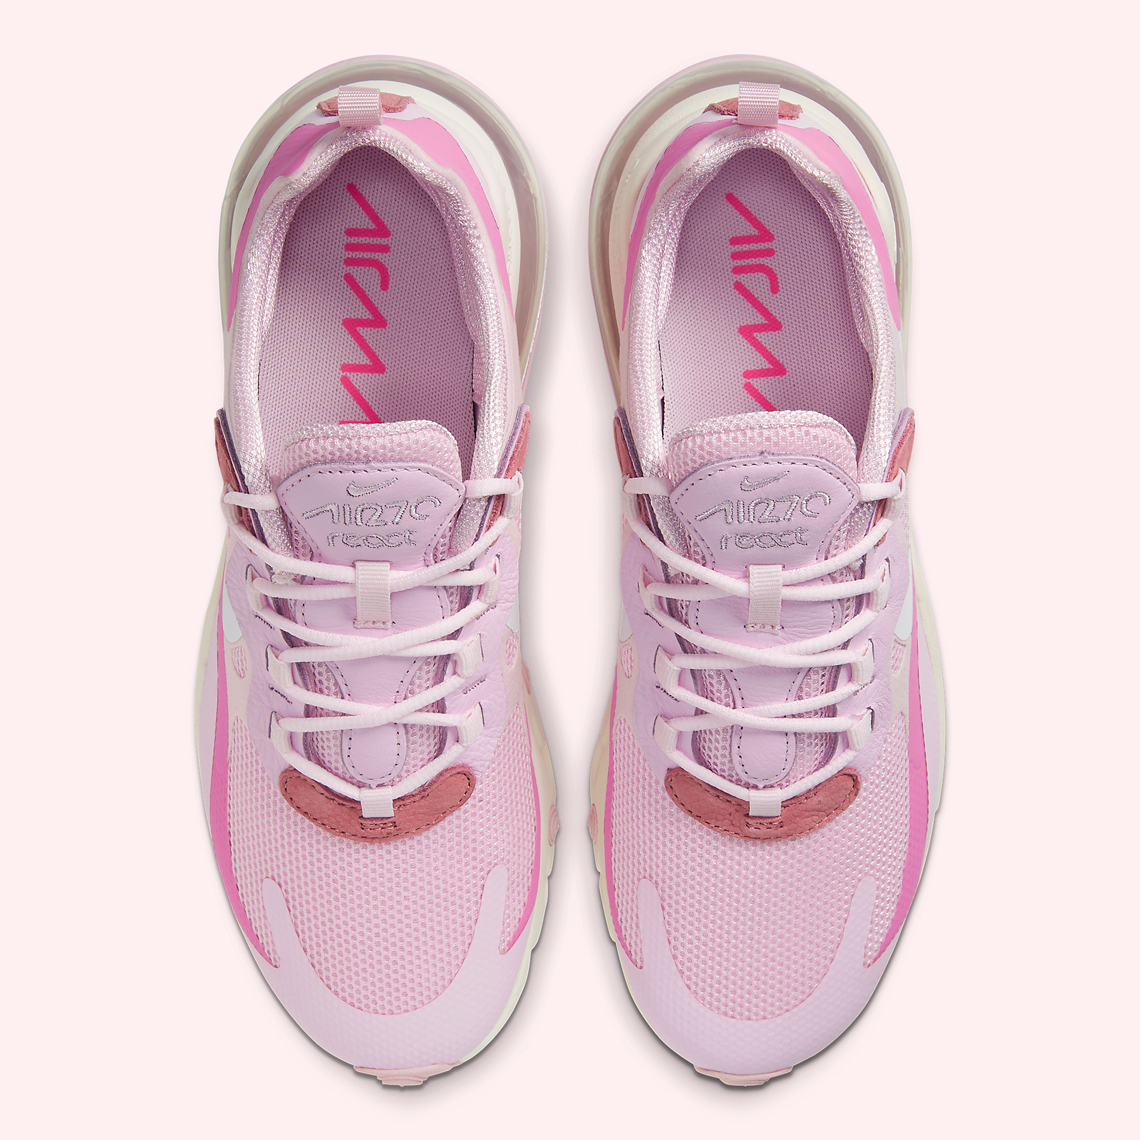 Nike Air Max 270 React Wmns Pink Cz0364 600 Sneakernews Com